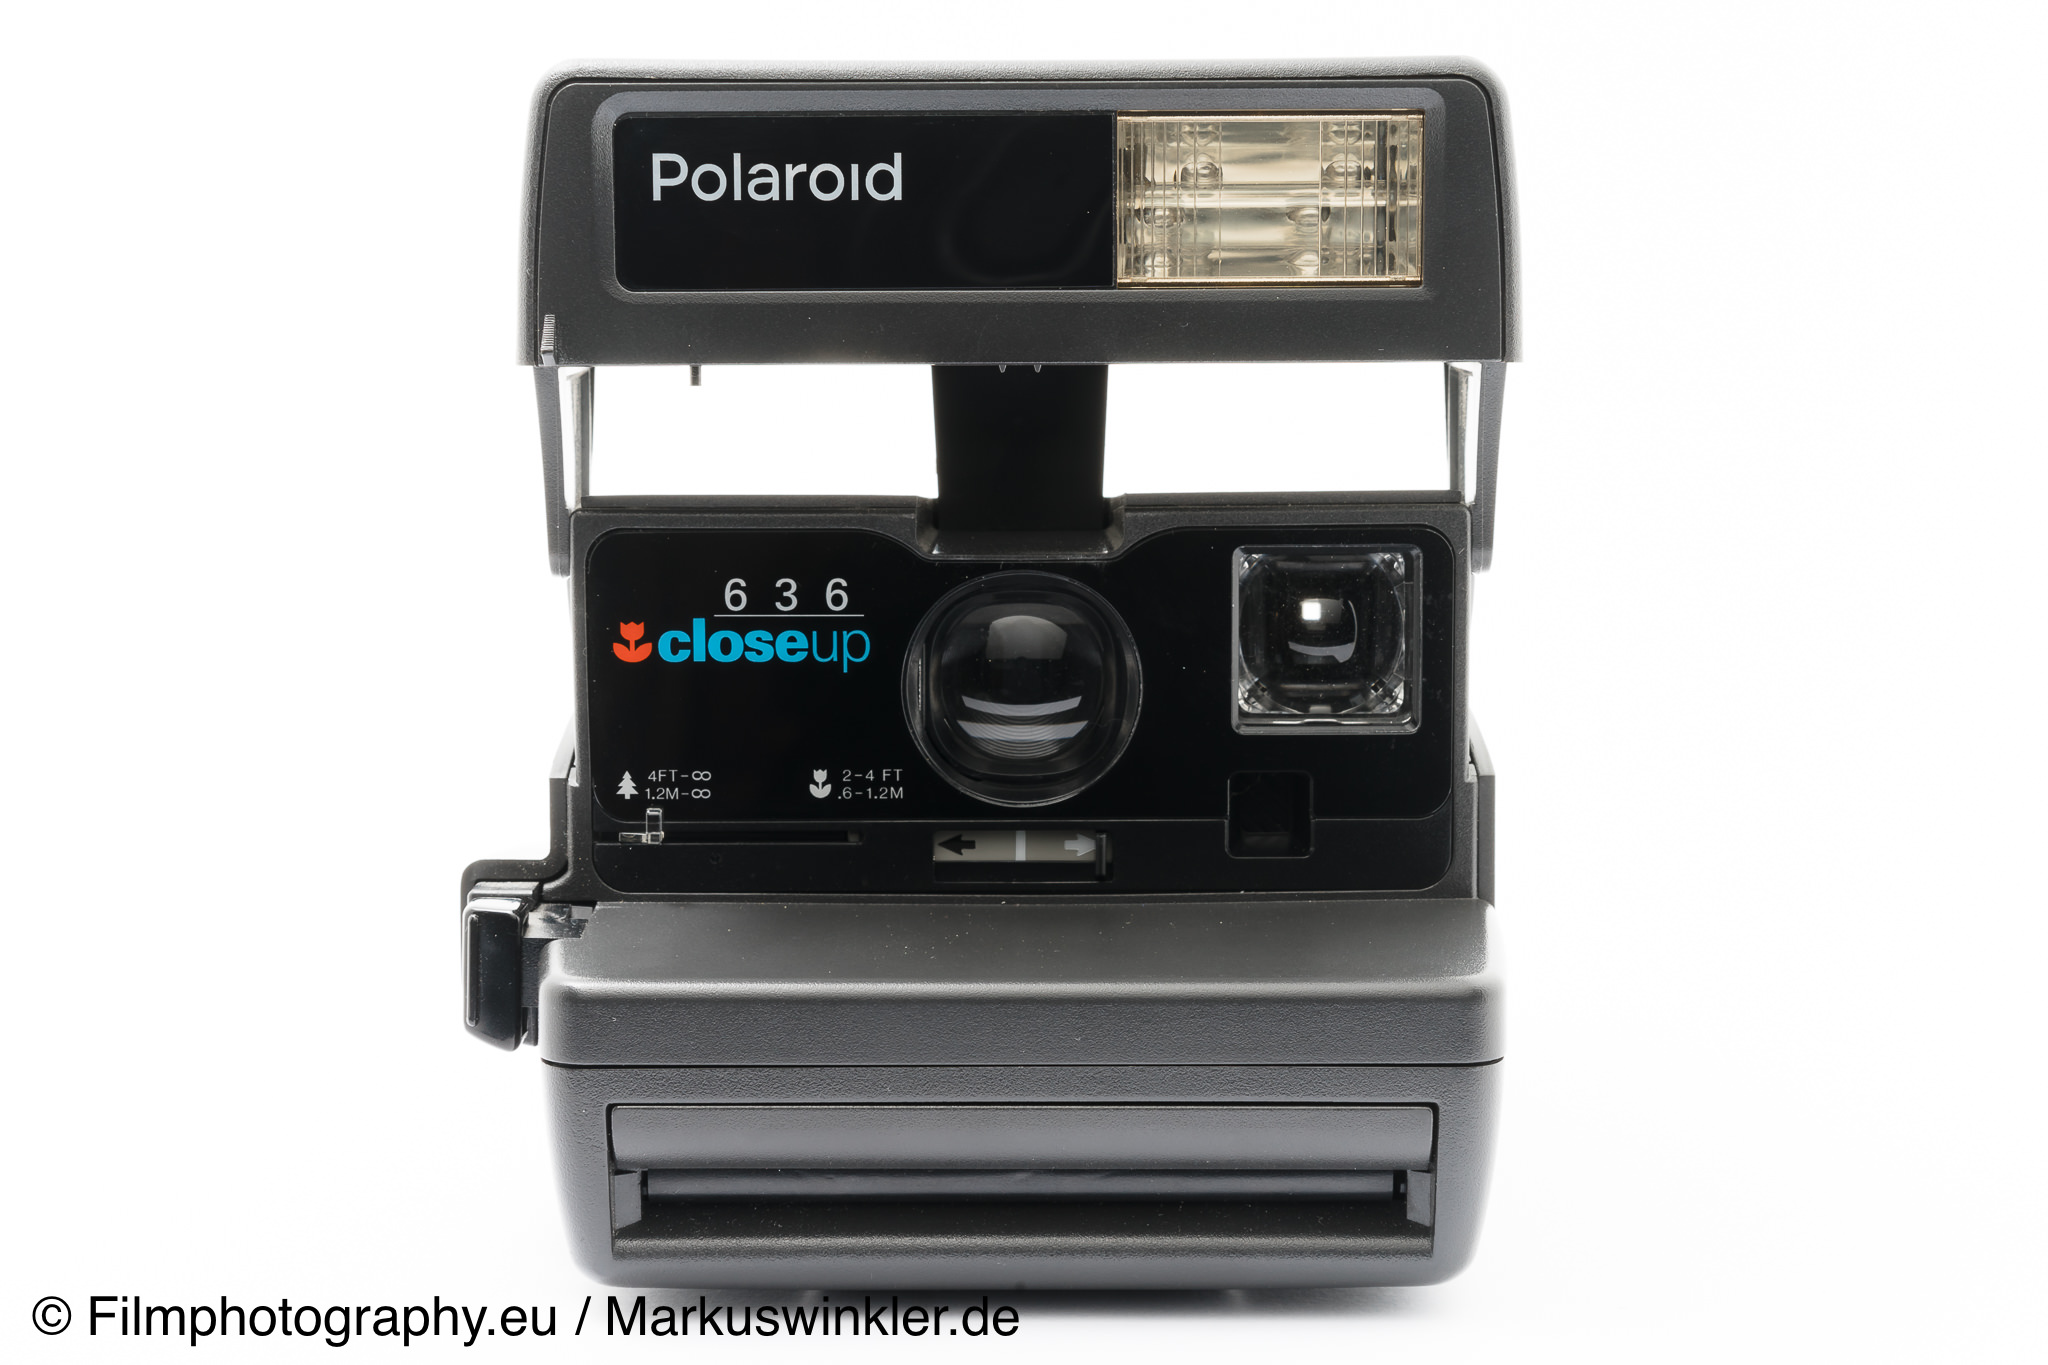 Polaroid 636 Closeup Sofortbildkamera für das 600er Format